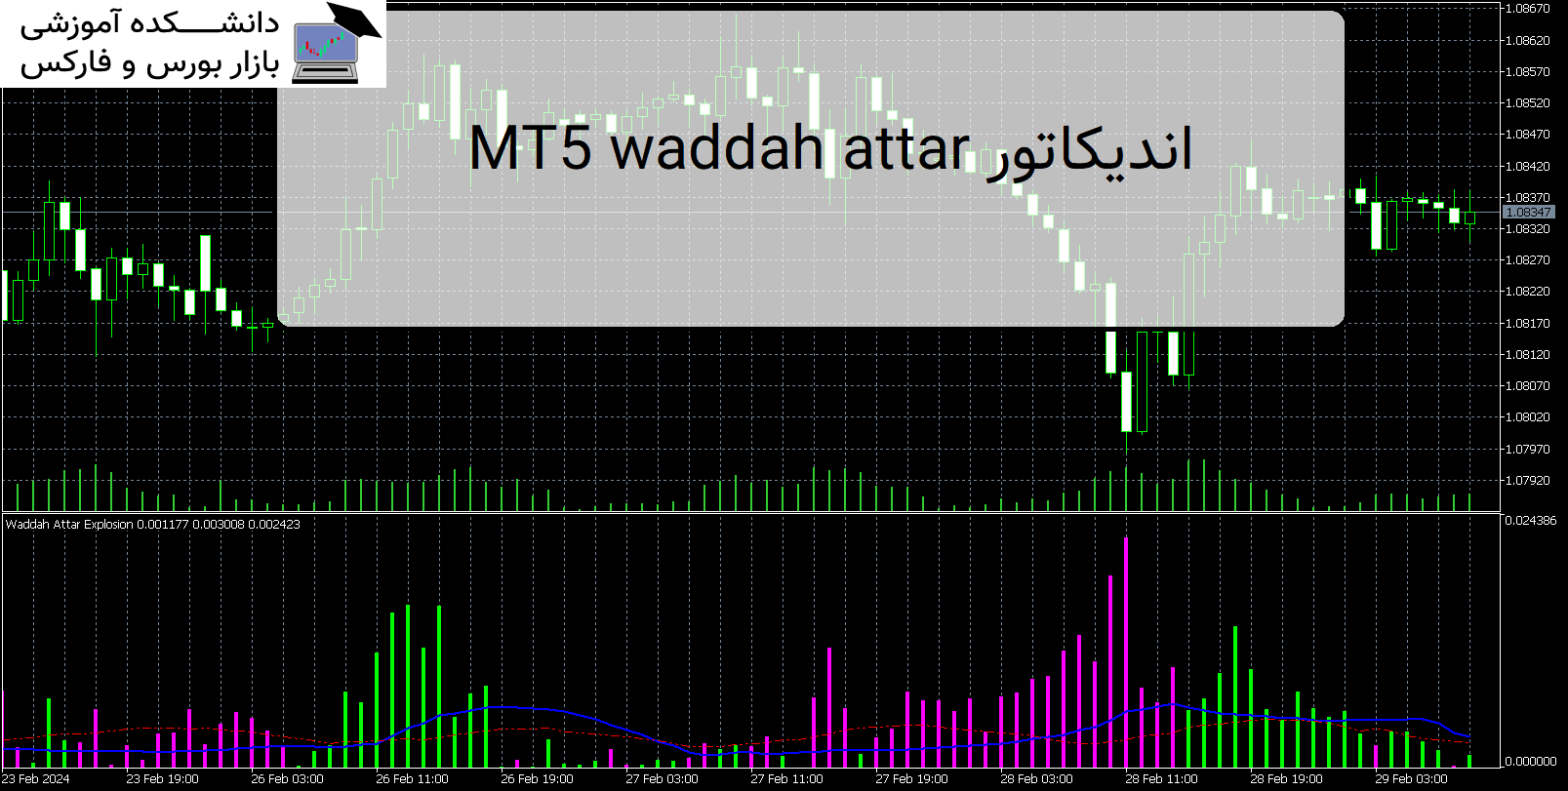 MT5 waddah attar اندیکاتور